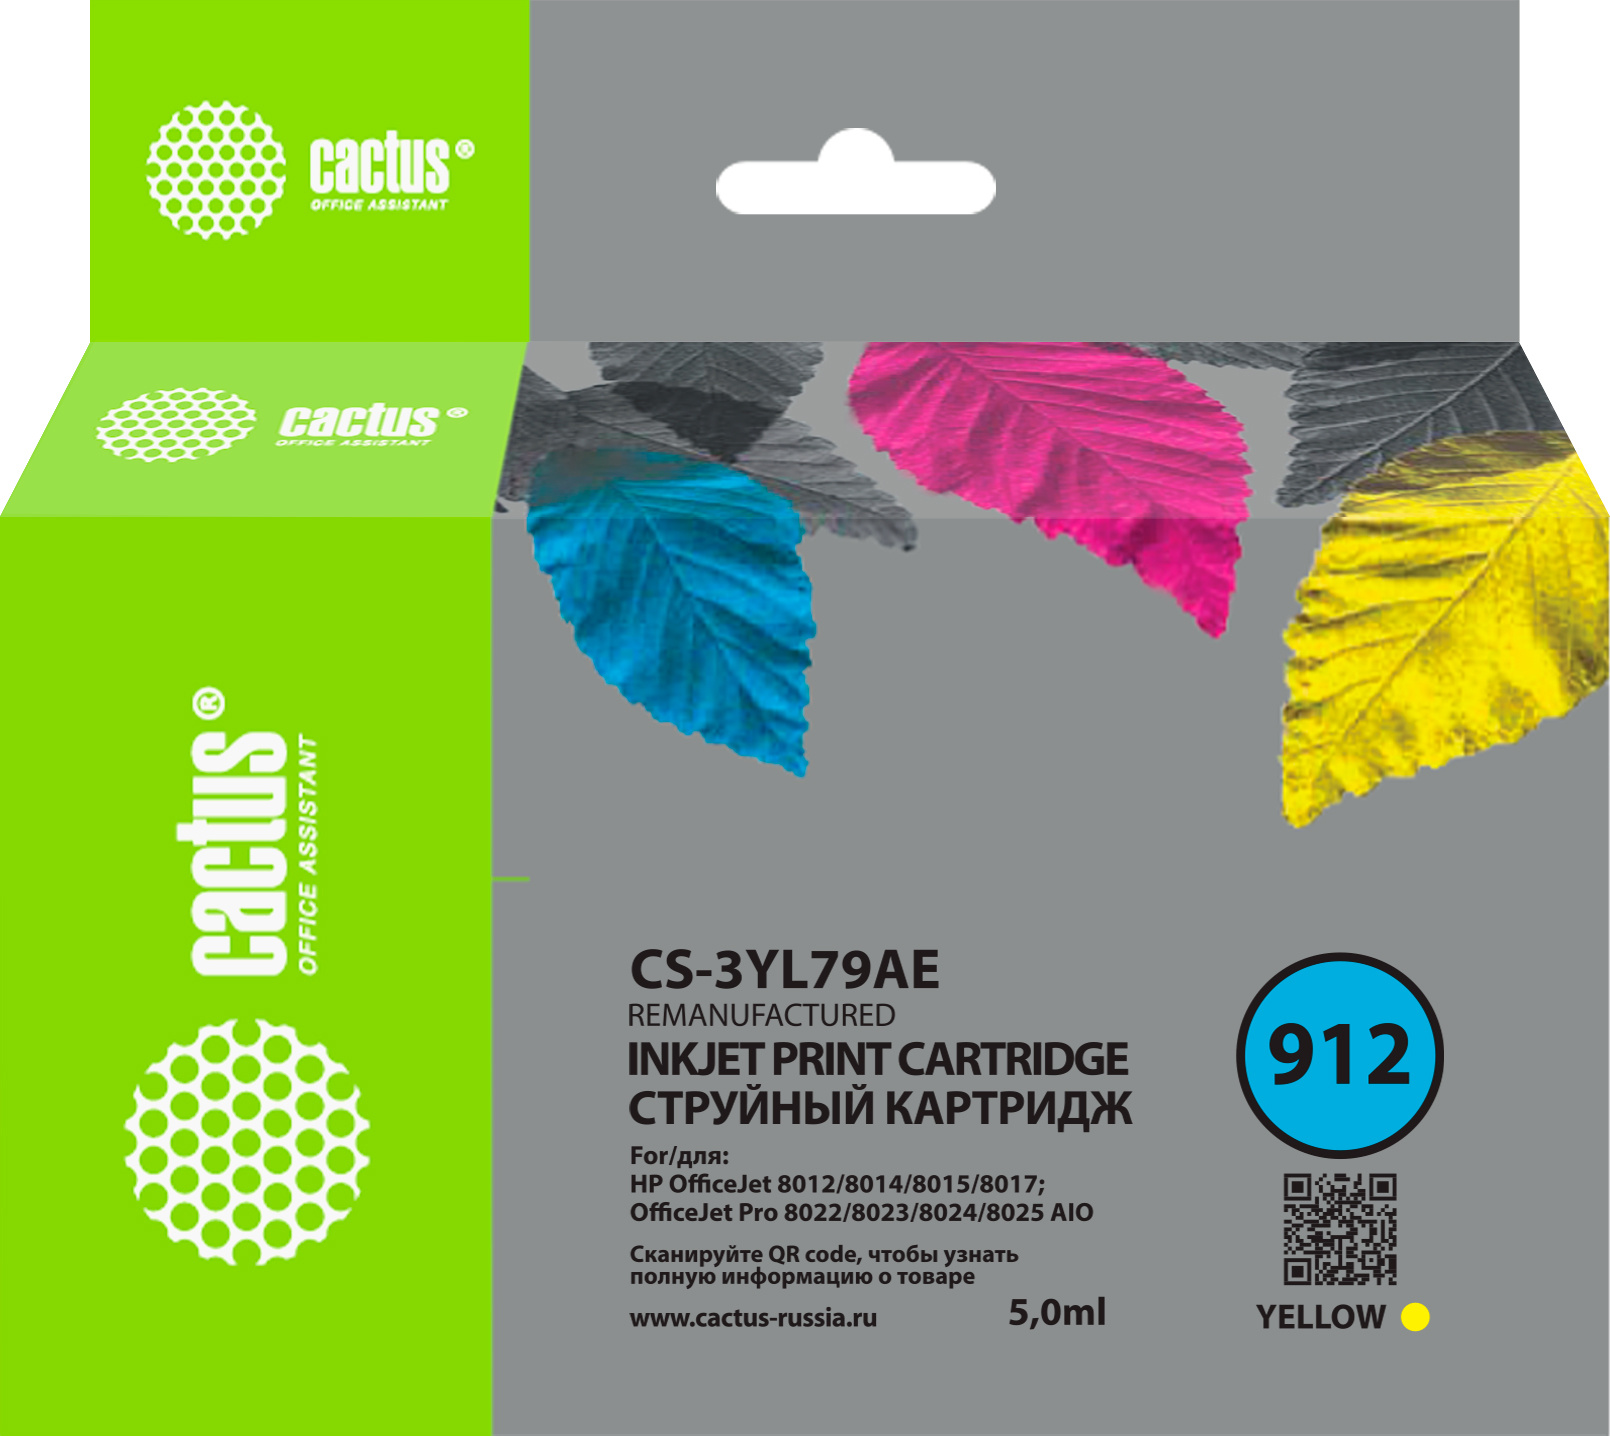 Картридж струйный Cactus CS-3YL79AE 912 желтый (5мл) для HP OfficeJet 8010/8012/8013/8014/8015/8020/8025